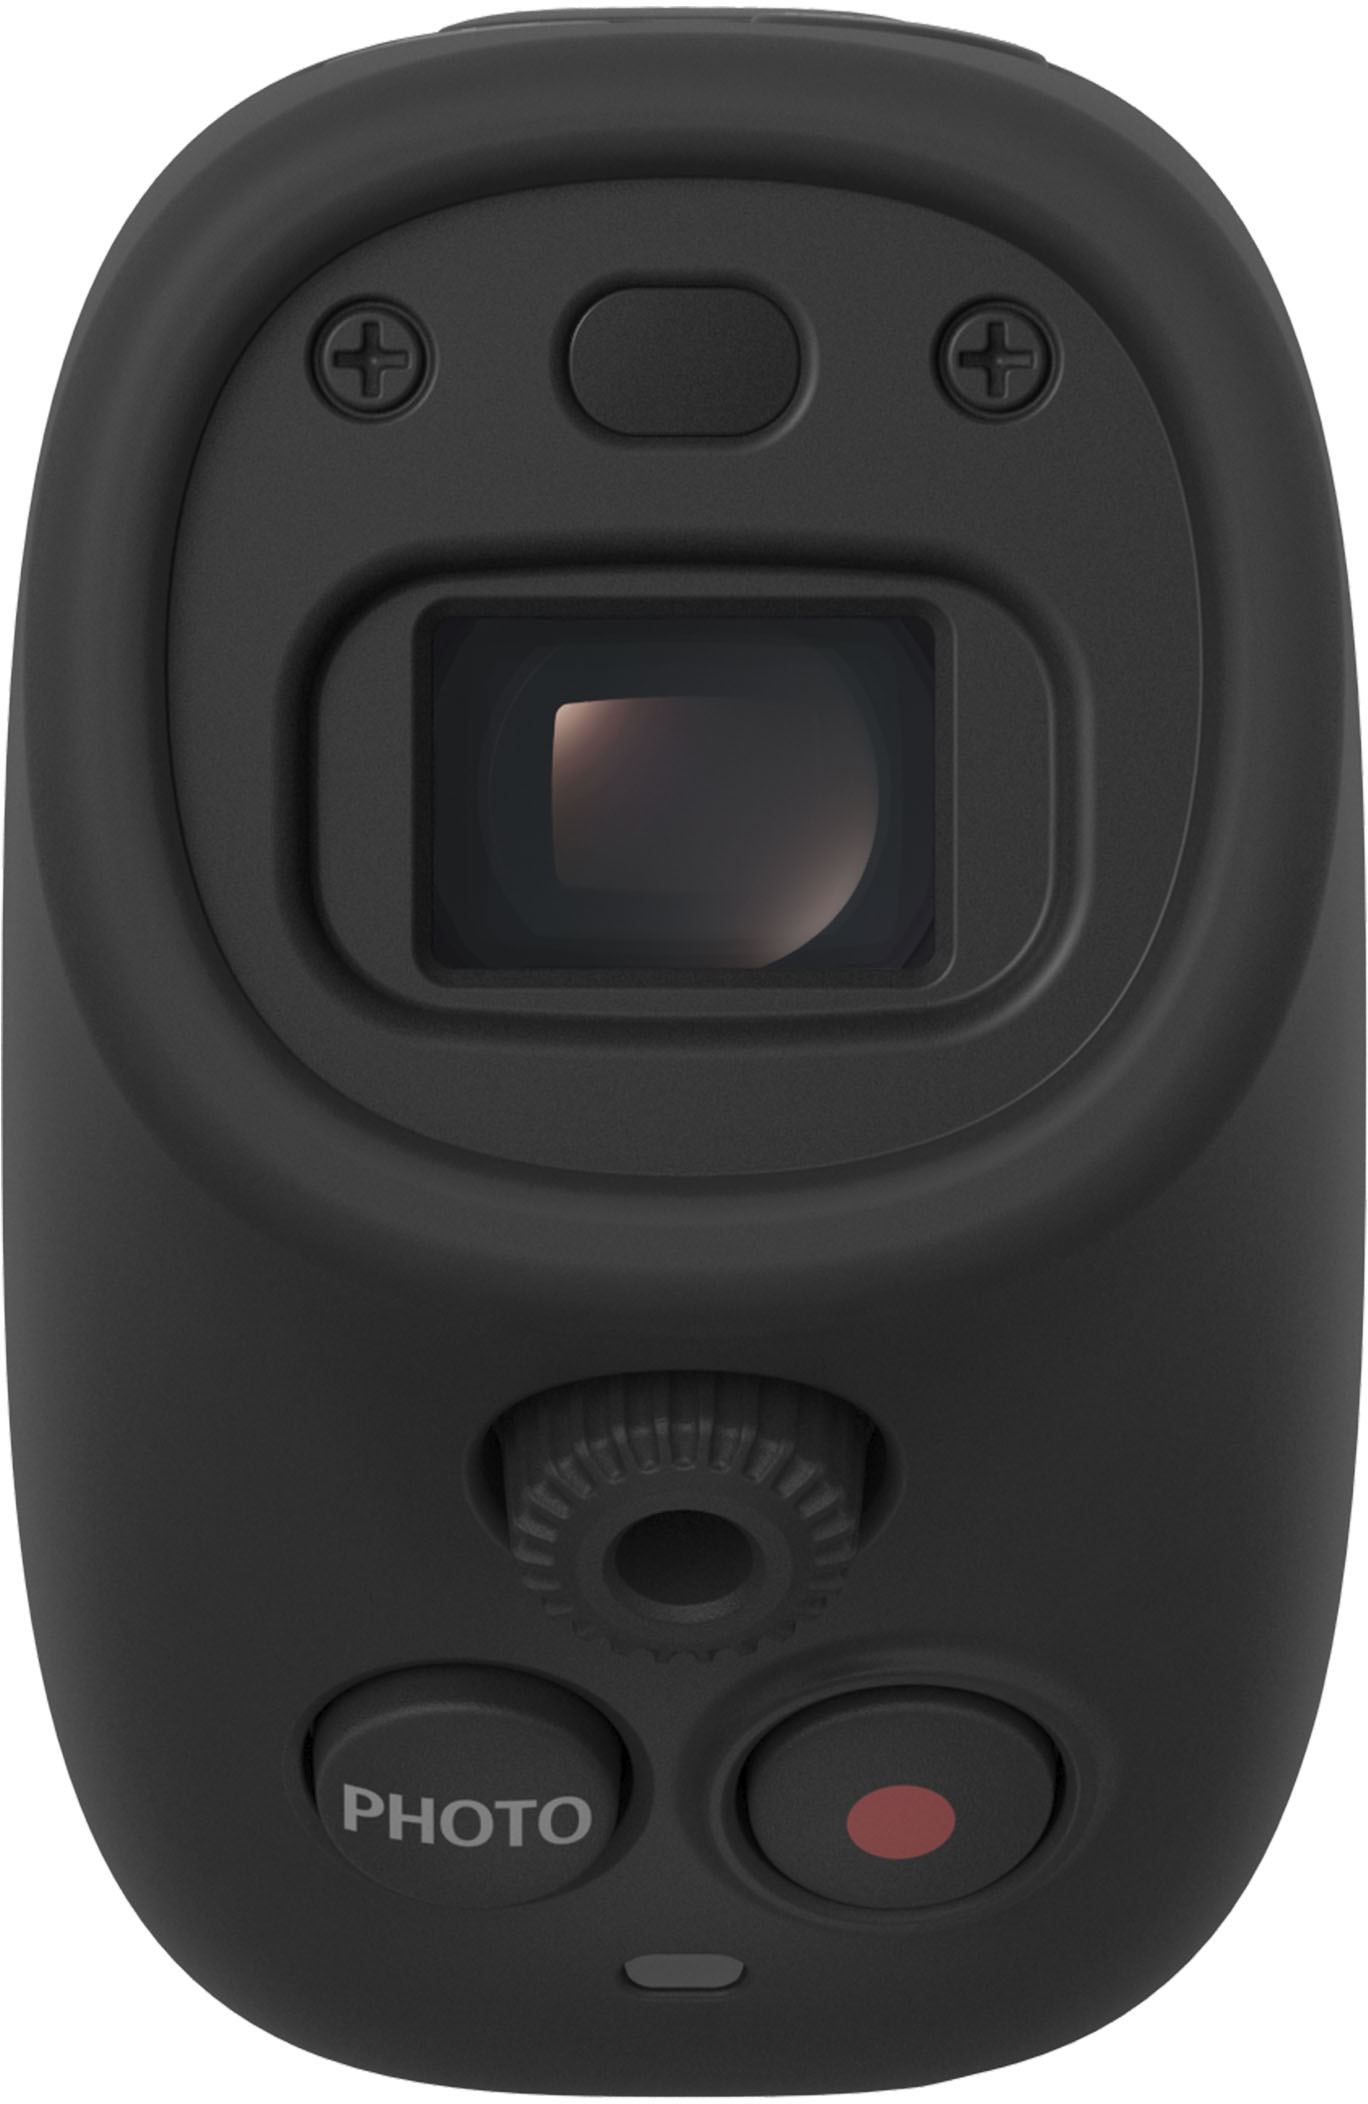 Back View: Canon - PIXMA iP8720 Wireless Photo Printer - Black